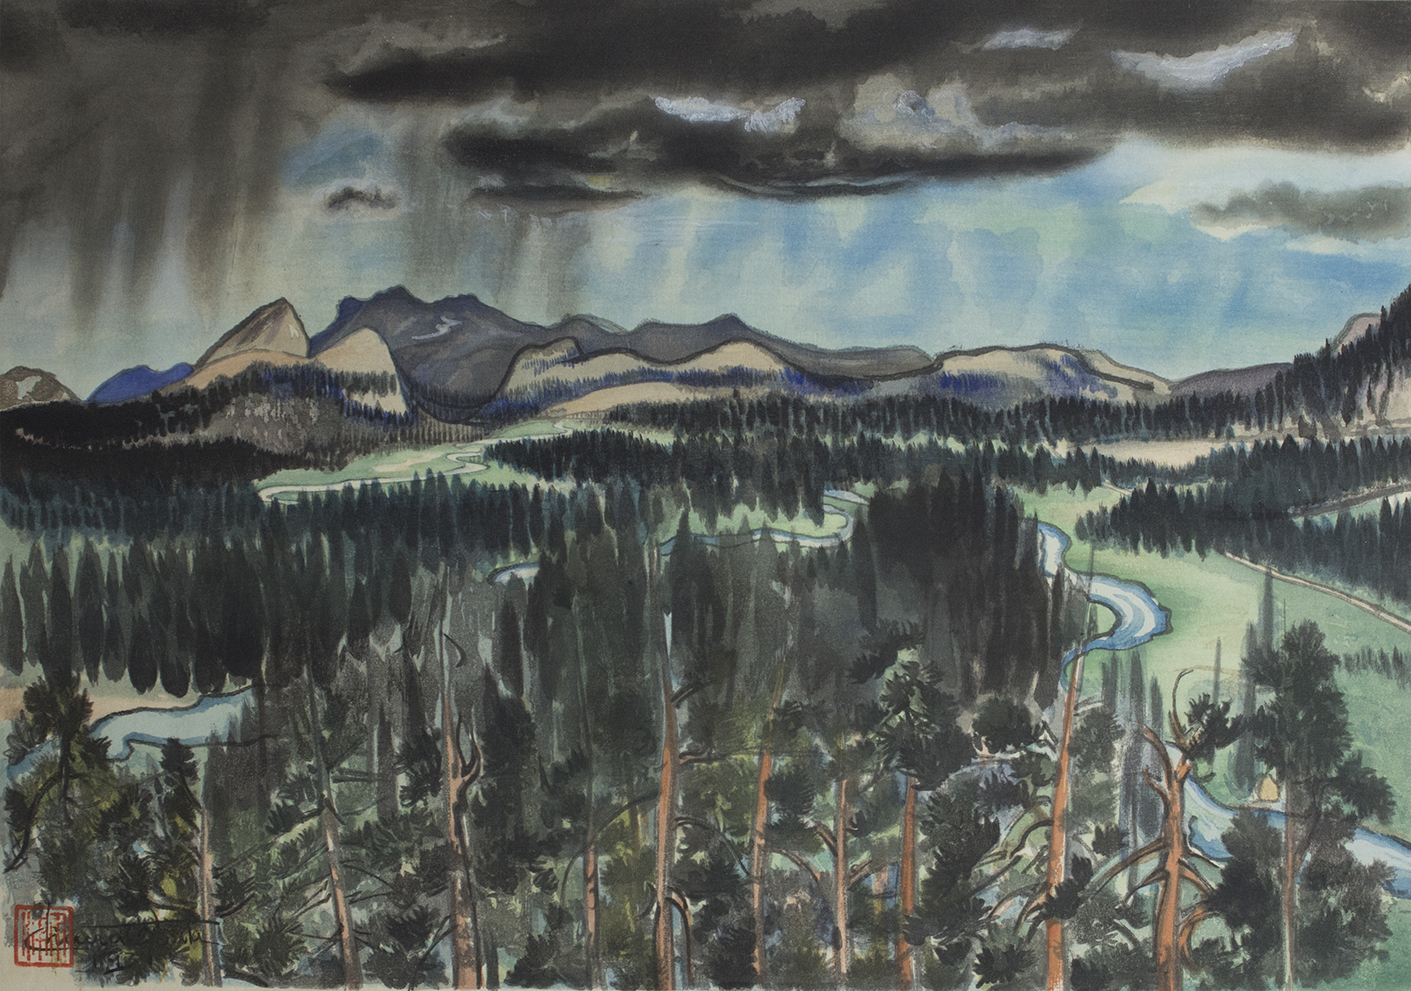 Chiura Obata, Before Thunderstorm, Tuolumne Meadows, 1930, color woodcut on paper